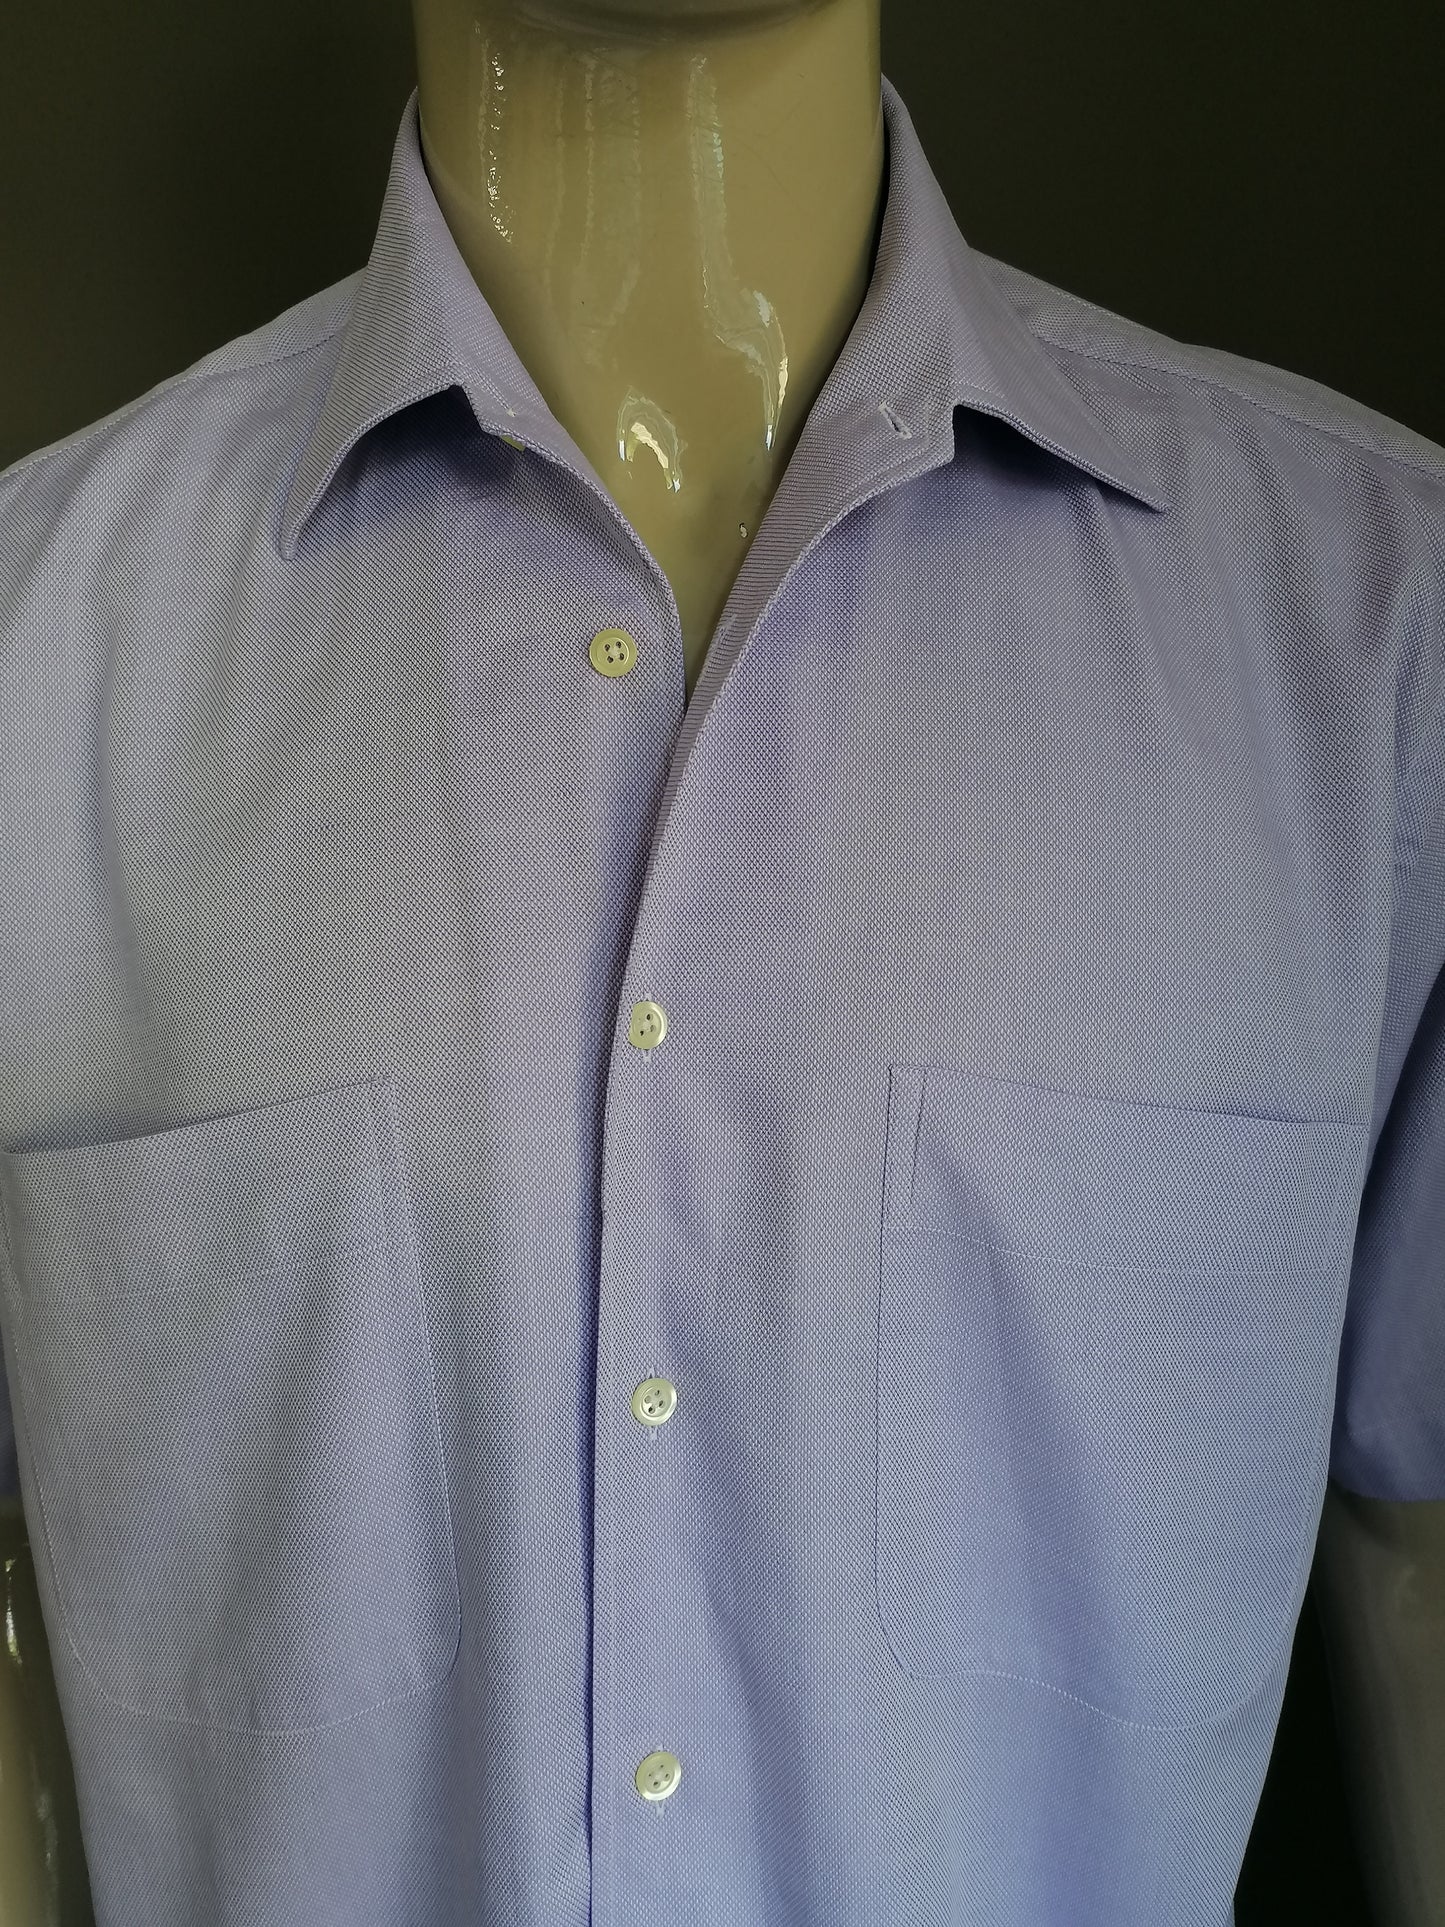 Emanuel Berg shirt short sleeve. Light purple colored. Size XL.